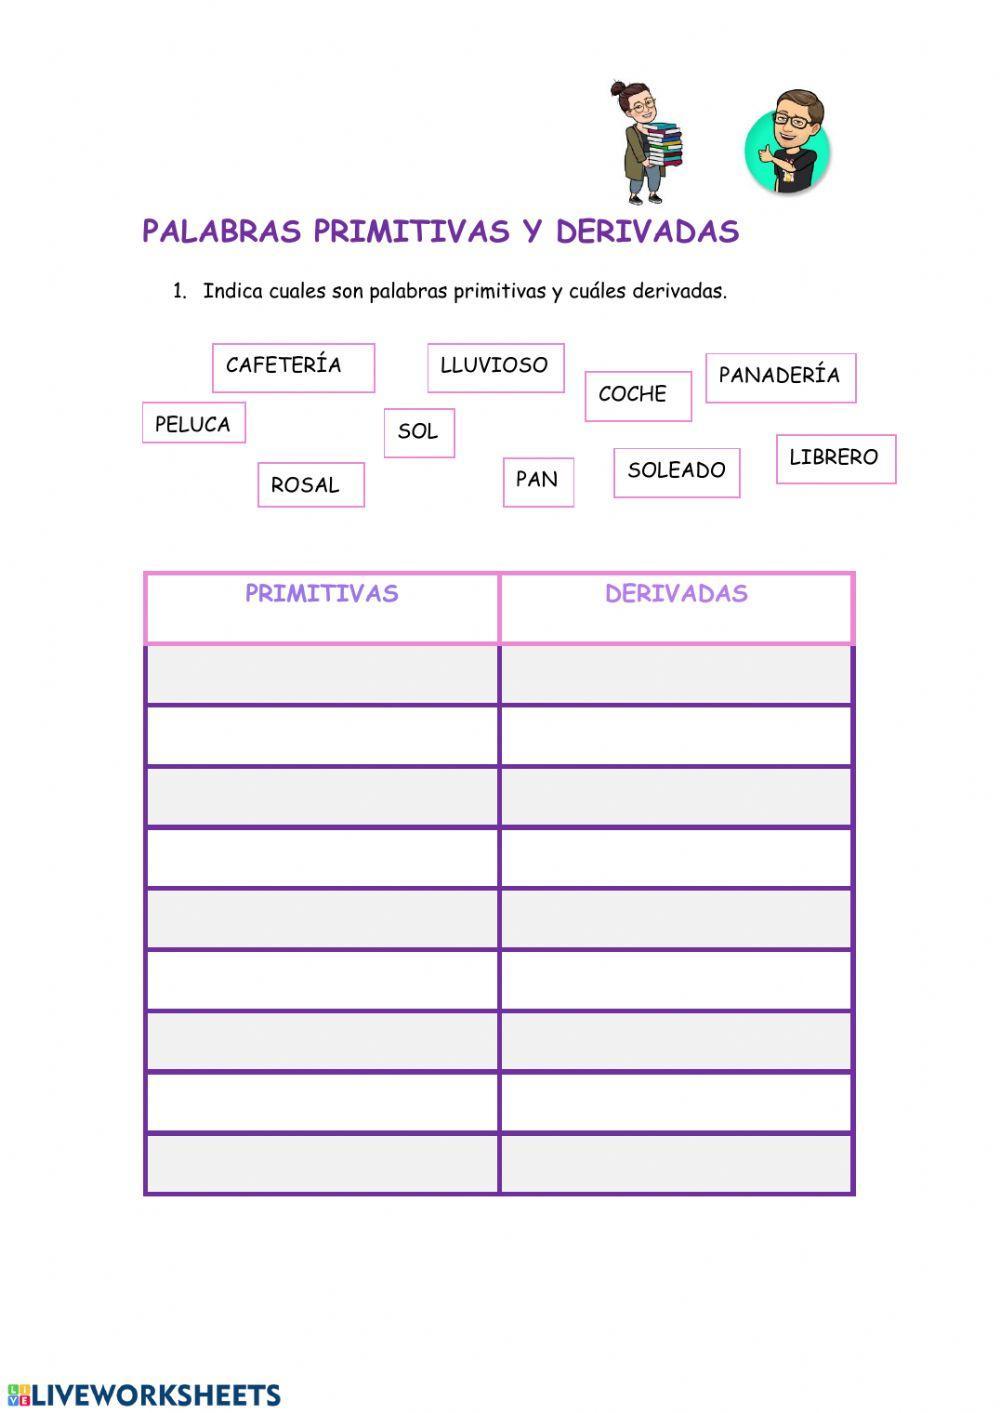 Palabras primitivas y derivadas interactive worksheet | Live Worksheets